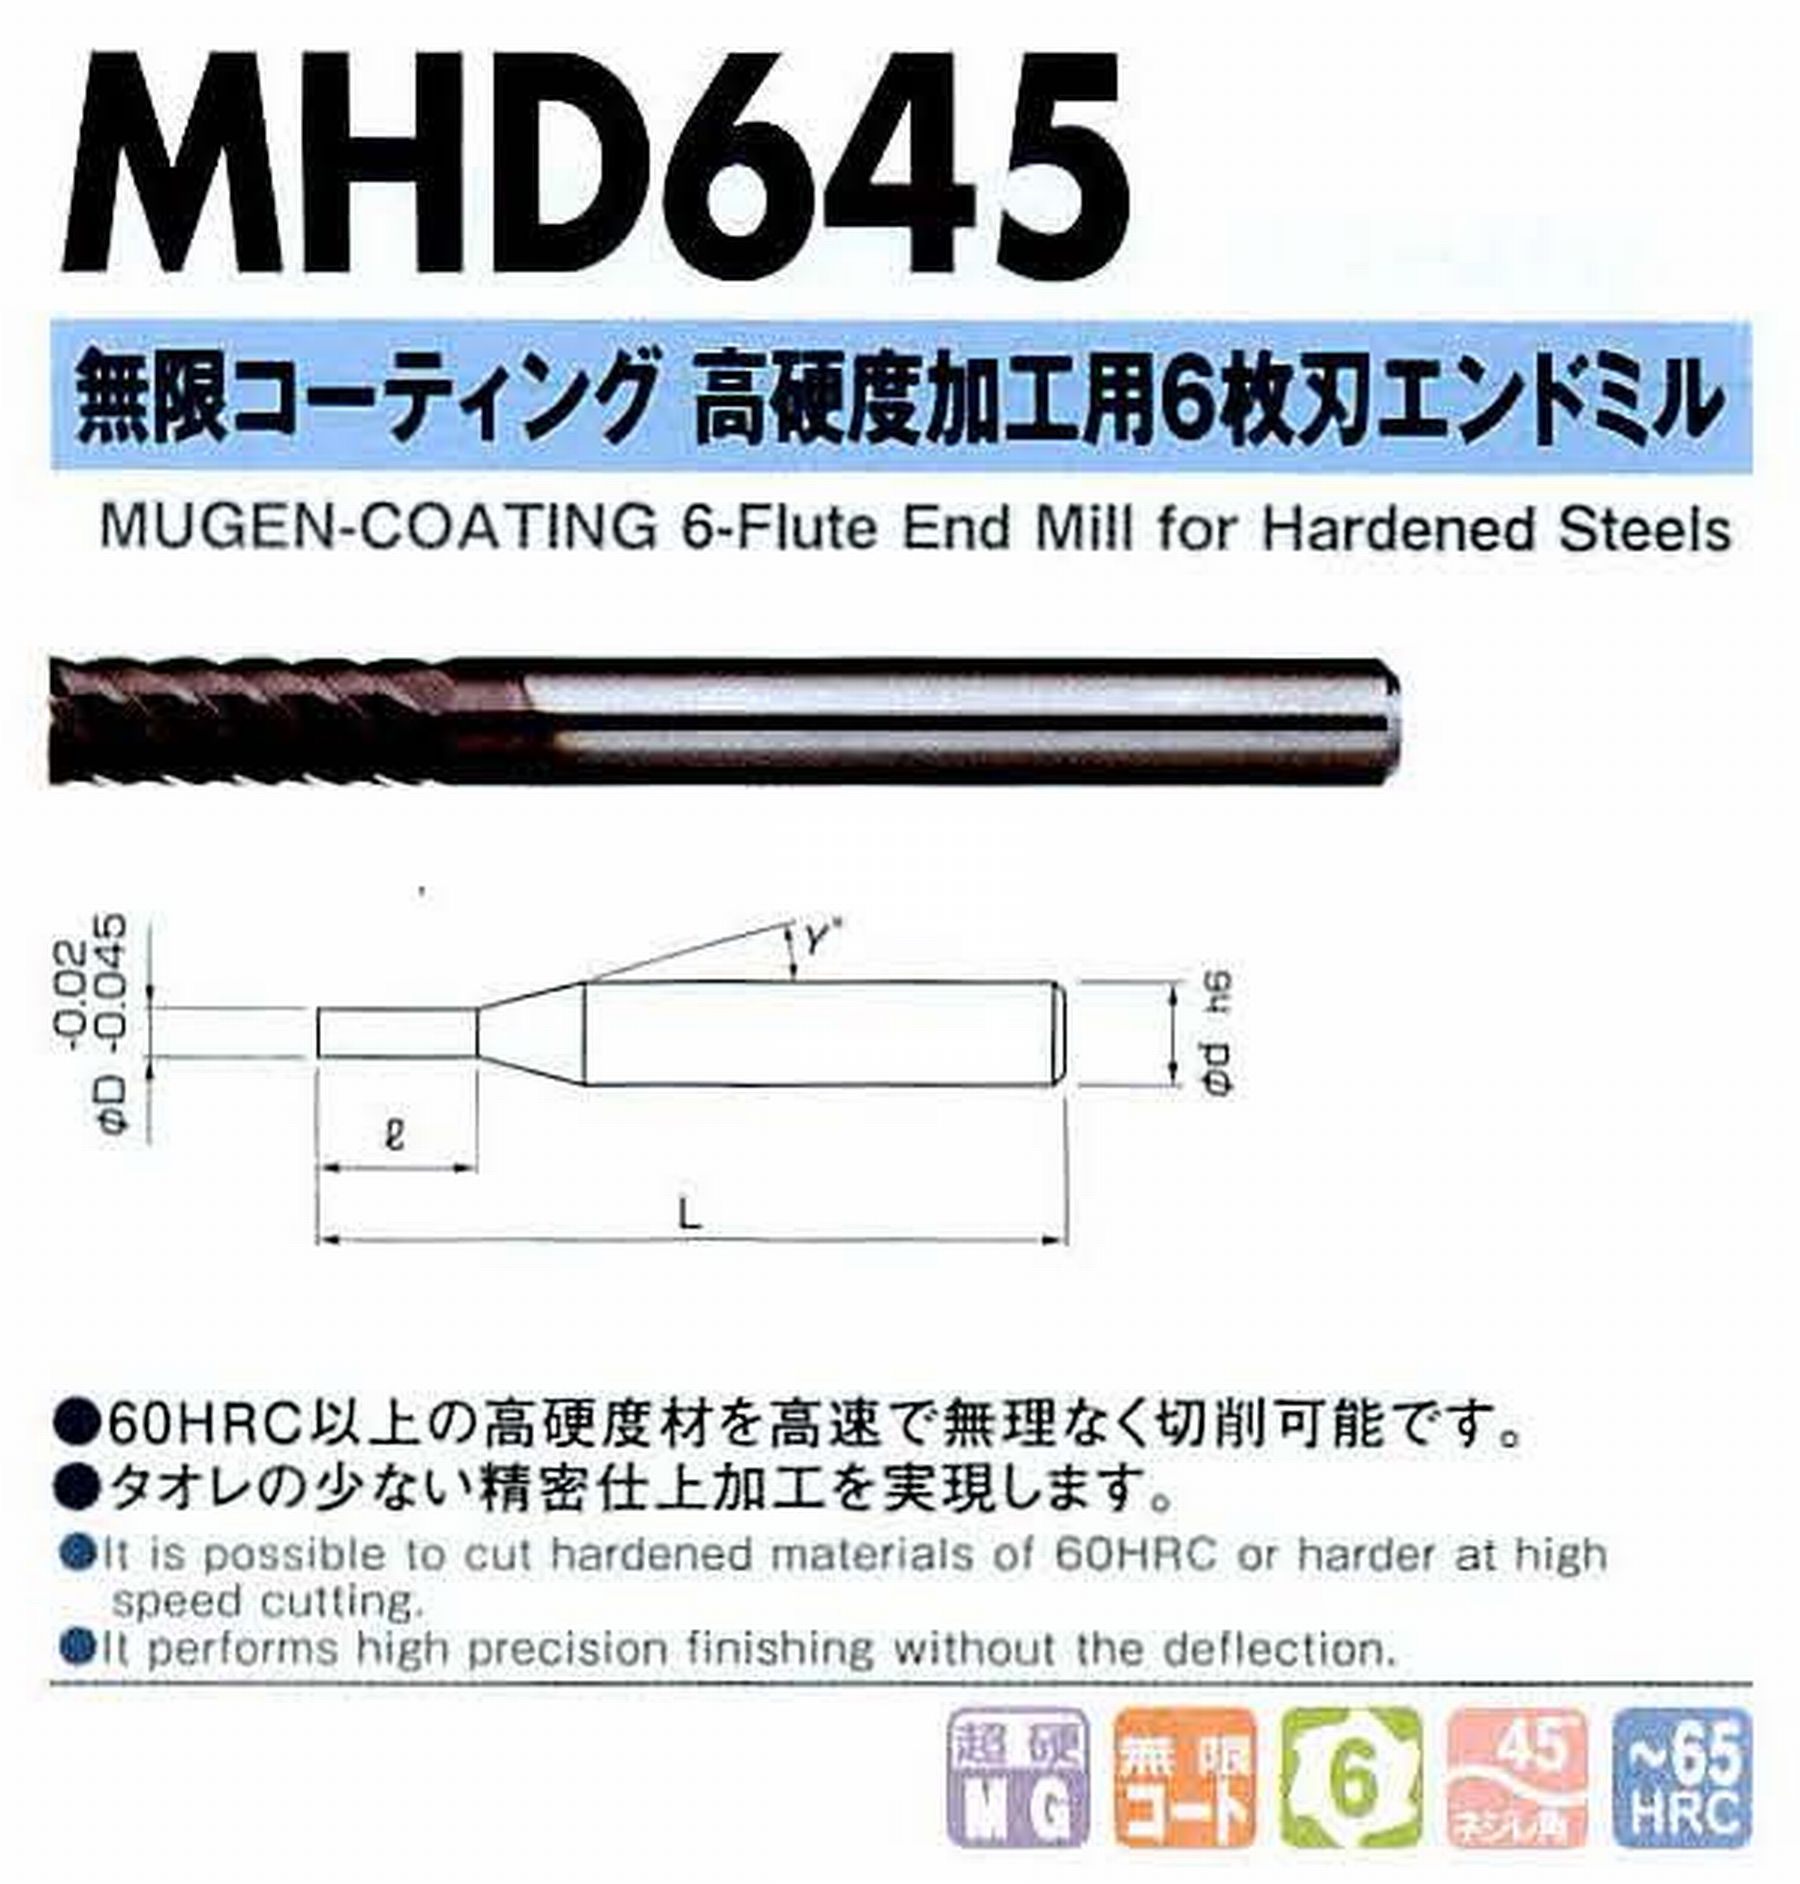 NS 日進工具 MHD645 無限コーティング高硬度加工用6枚刃エンドミル コードNO．08-00410-00600 刃径6 刃長15 首角- シャンク径6mm 全長60